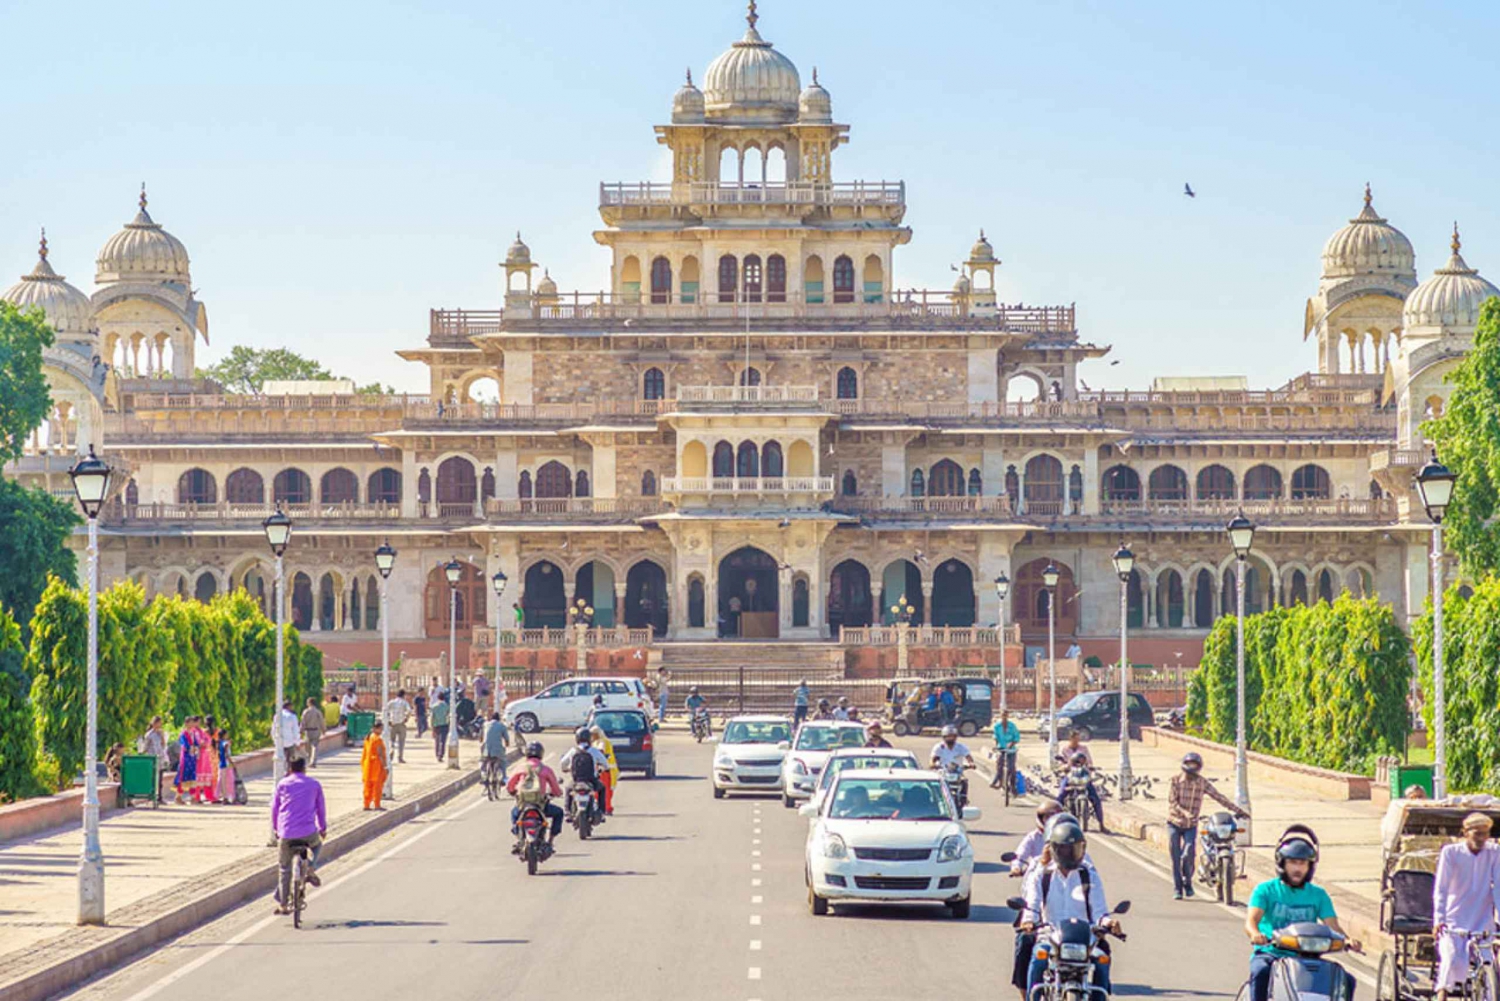 Agra till Jaipur taxi via Fatehpur Sikri & abhaneri stepwell